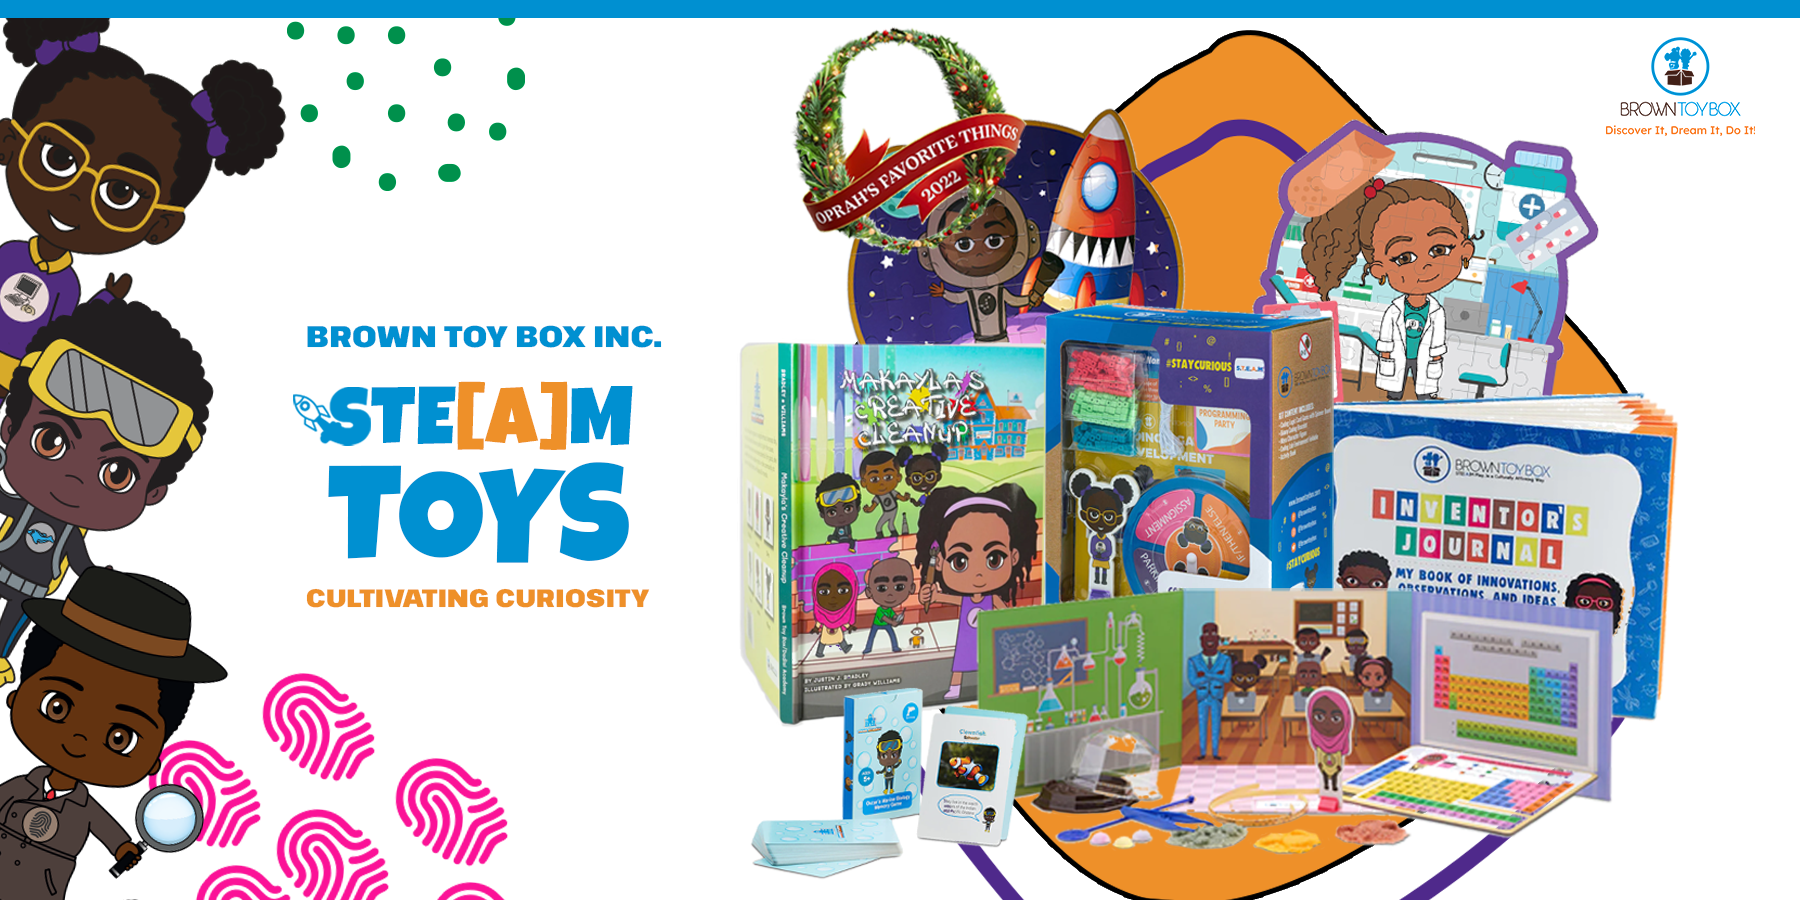 JAKKS Pacific CoComelon Toys, Brown Toy Box Steam Kits, Yoto Mini, & More  New Products - aNb Media, Inc.